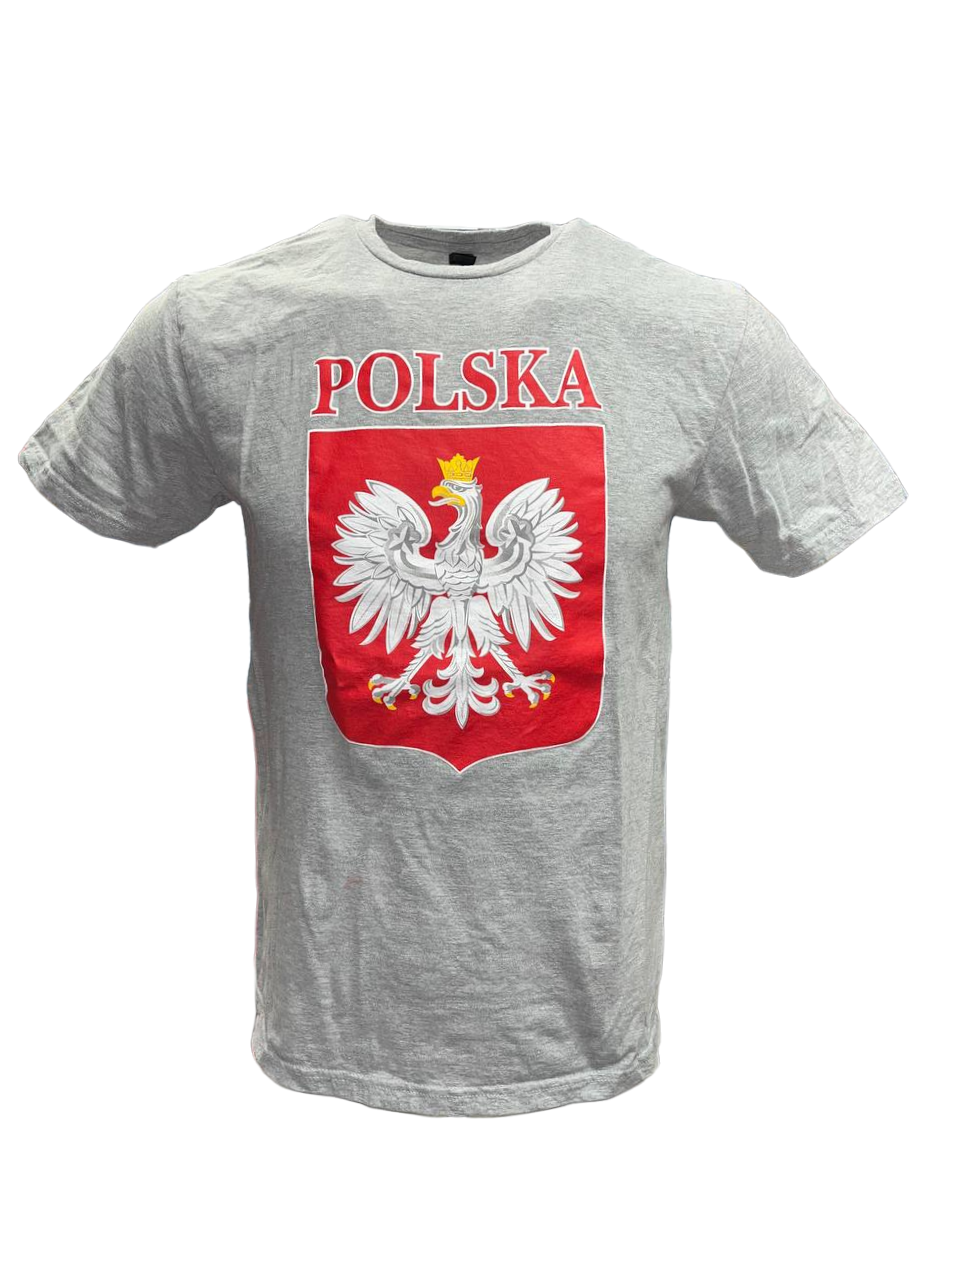 Polish Men's Polska Printed Eagle Crest T-Shirt - Gray